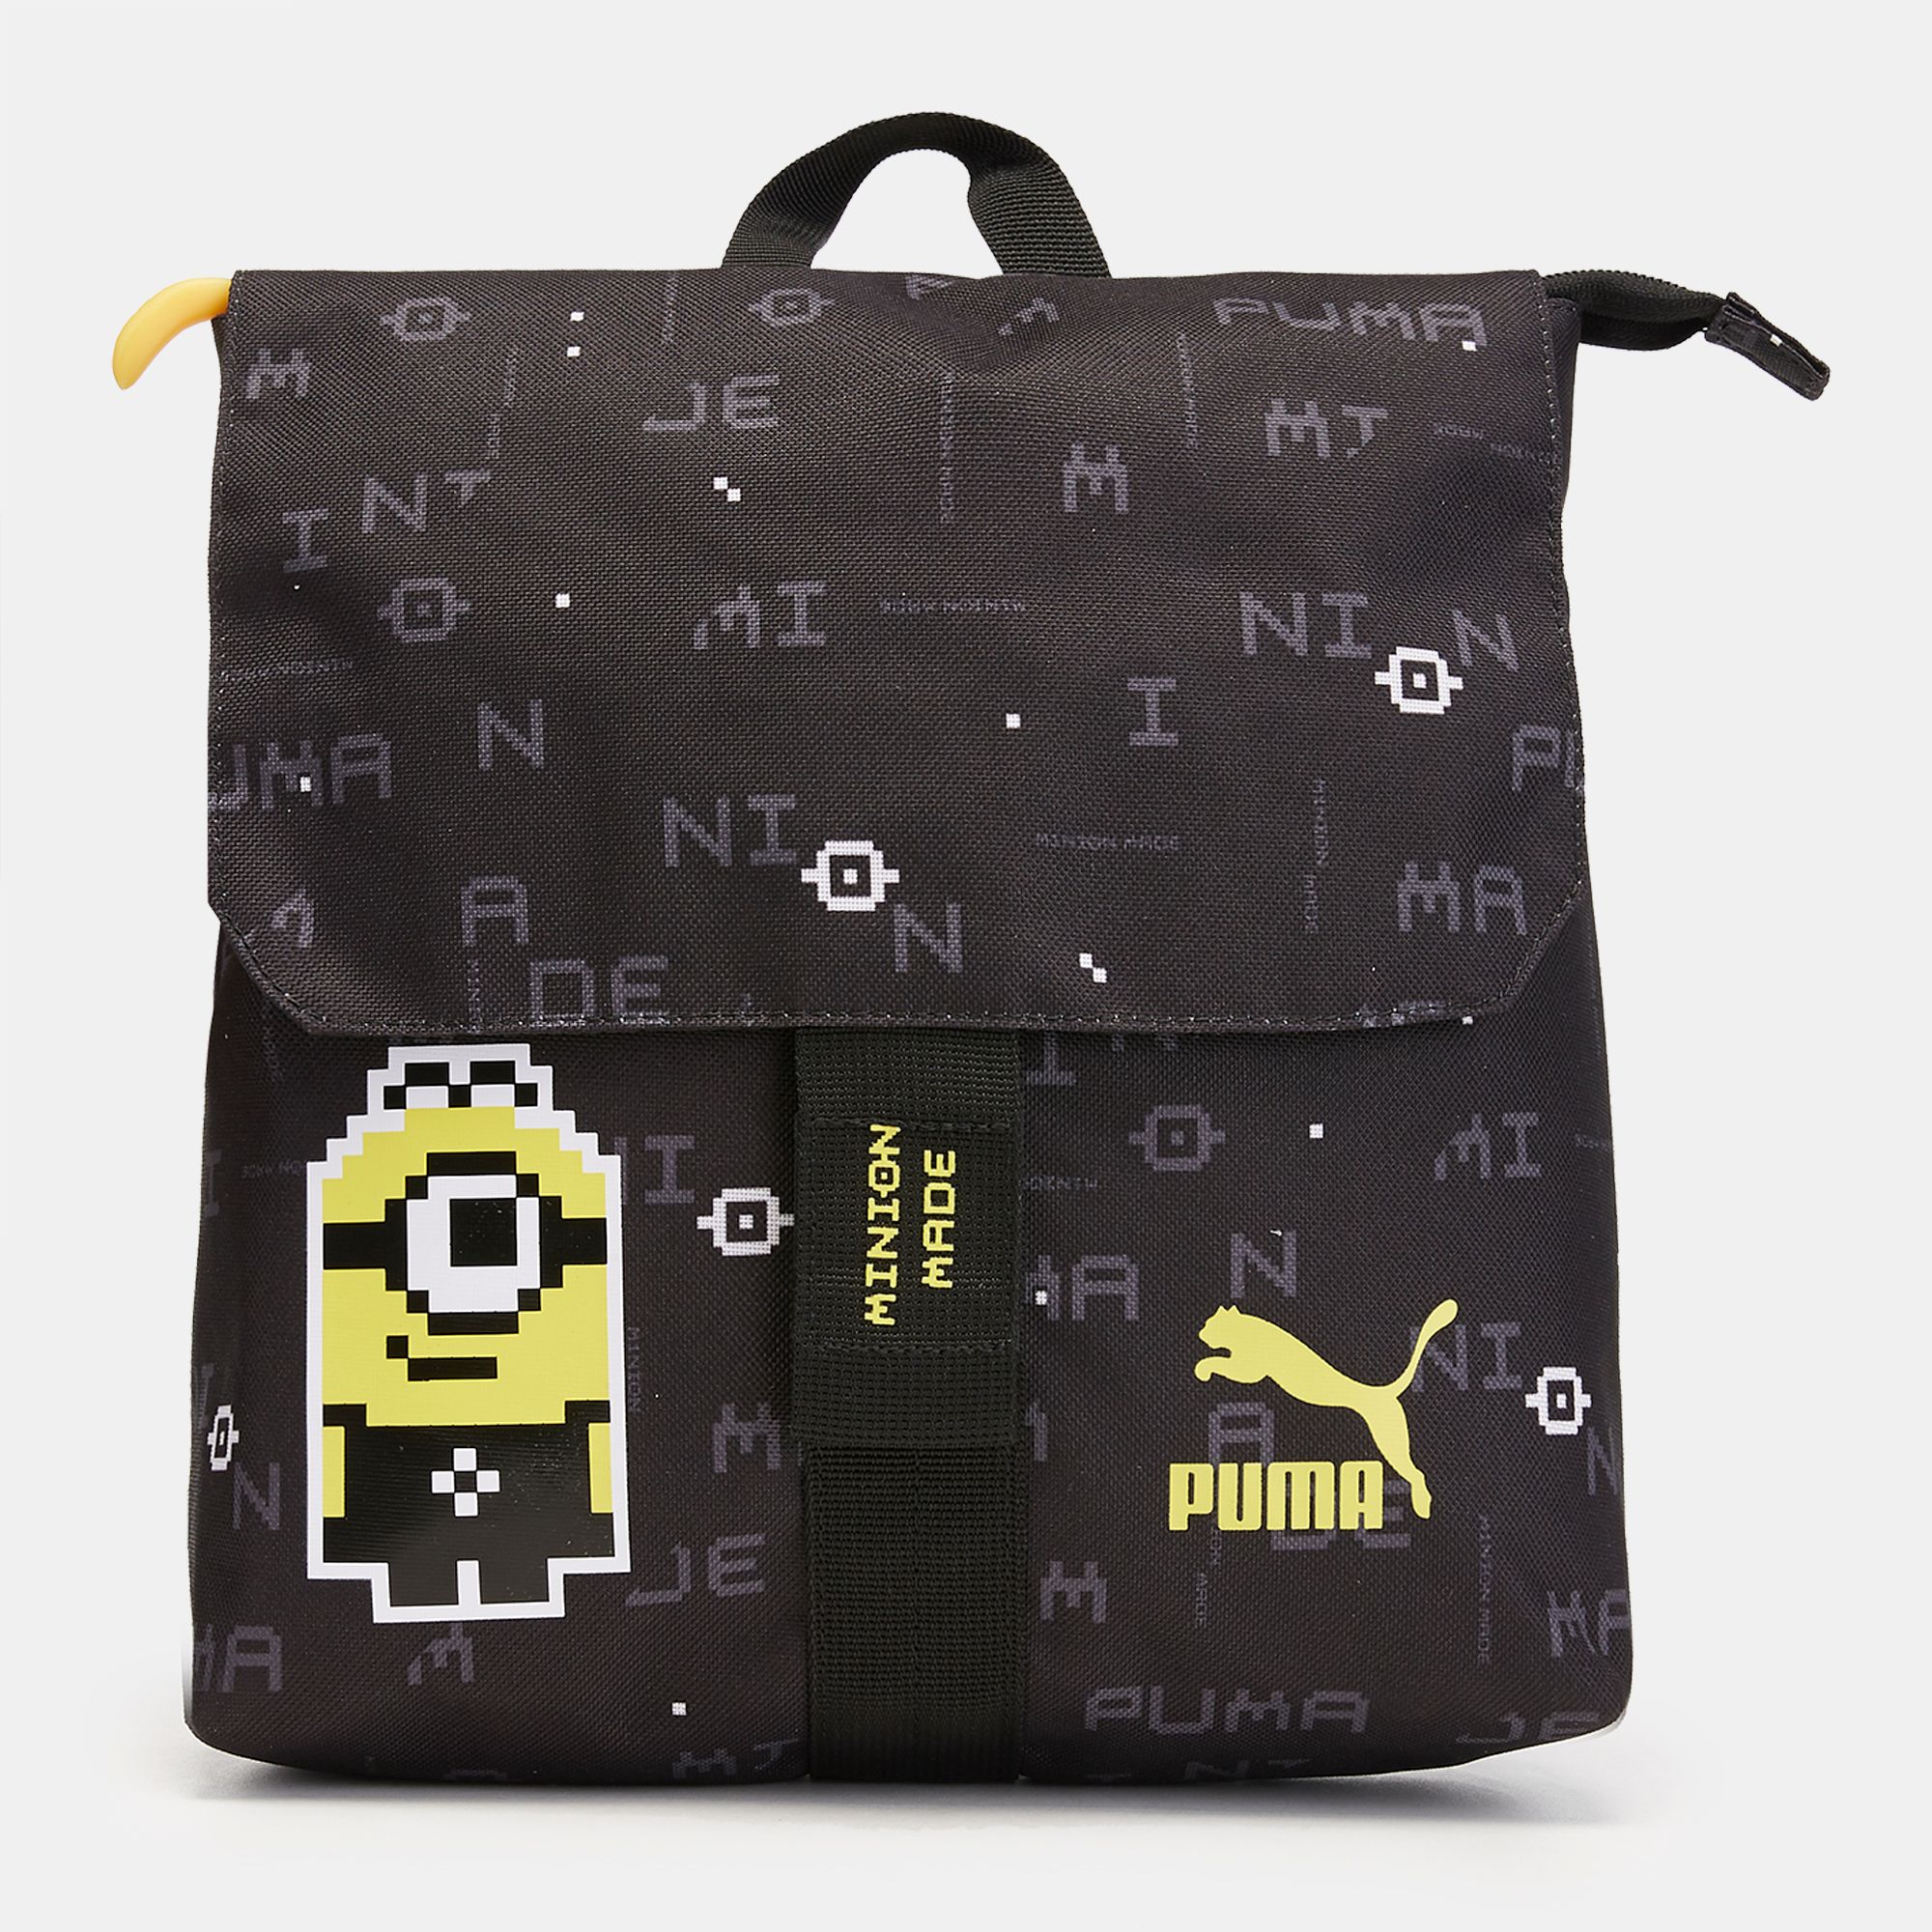 puma backpacks discount sale